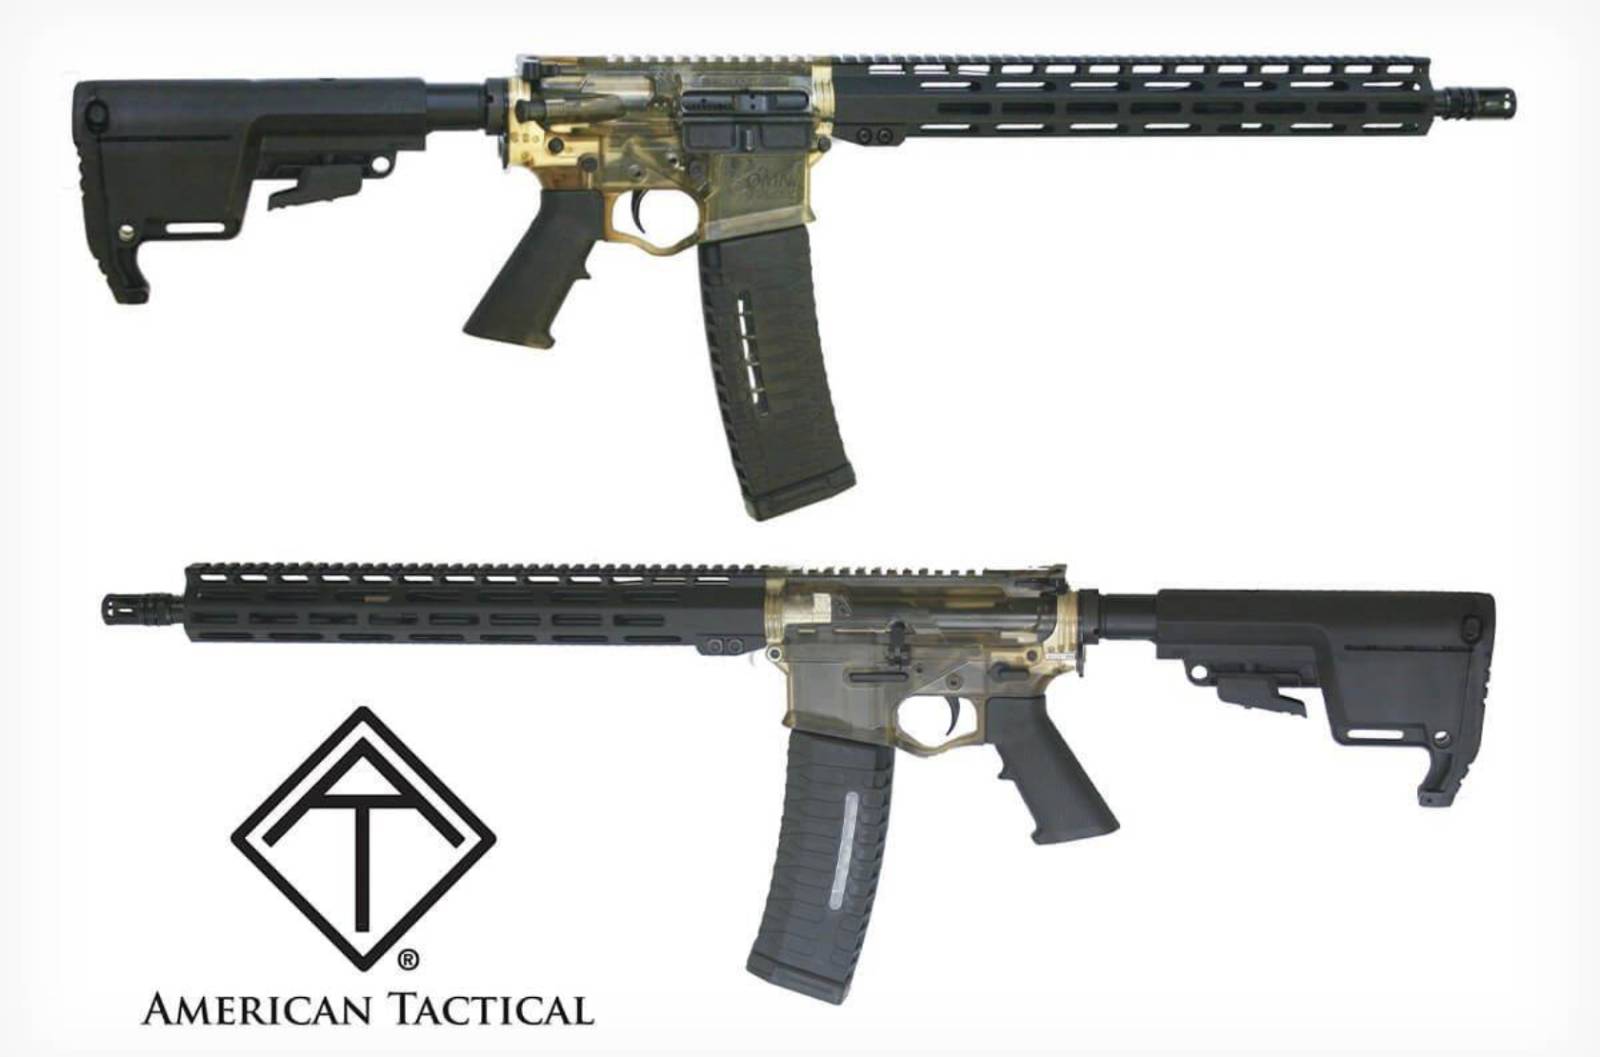 American Tactical Launches the Omni Hybrid Maxx RIA Translucent AR-15